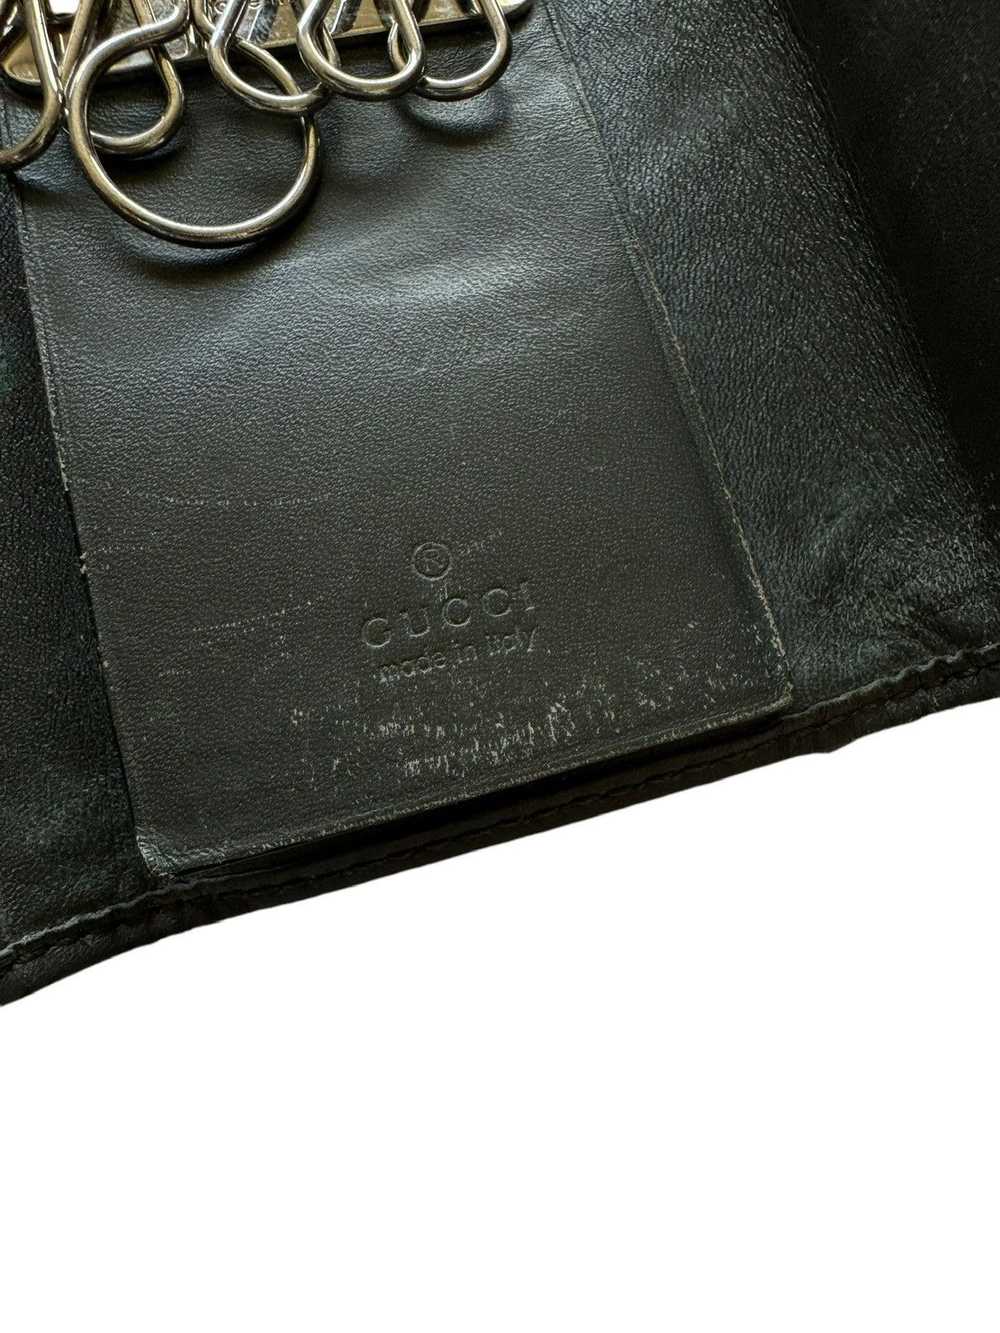 Gucci Gucci Monogram Leather Key Case - image 4